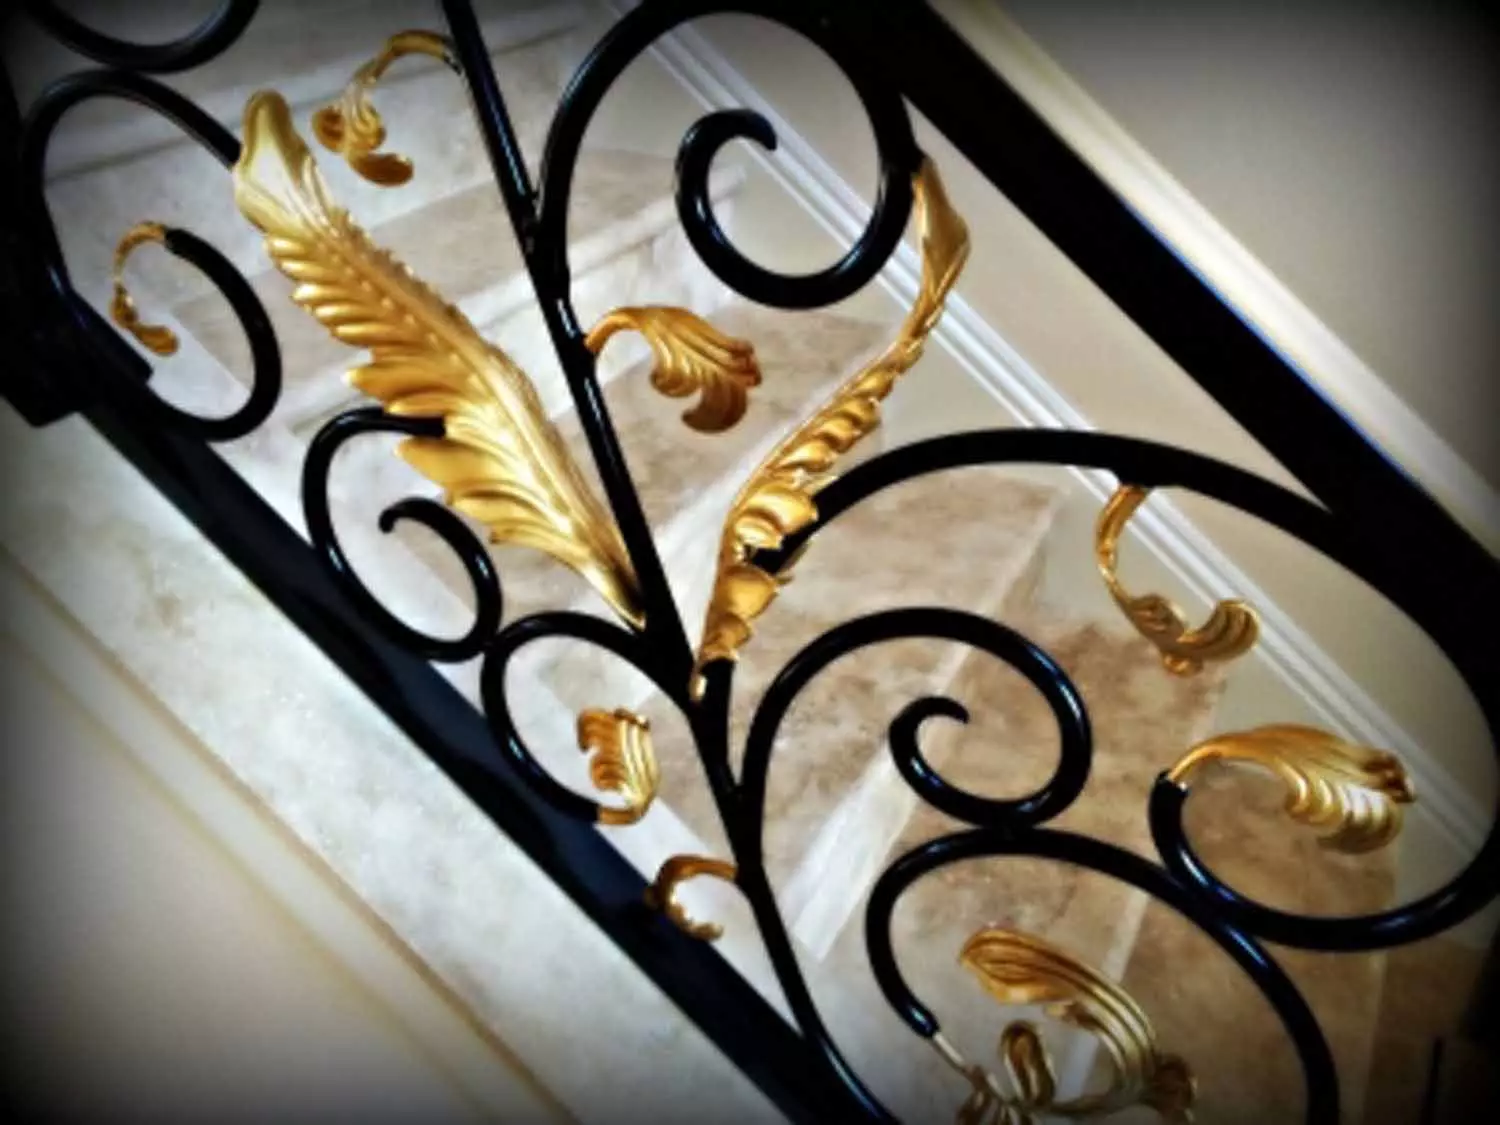 ornate bannister with gold leaf trim